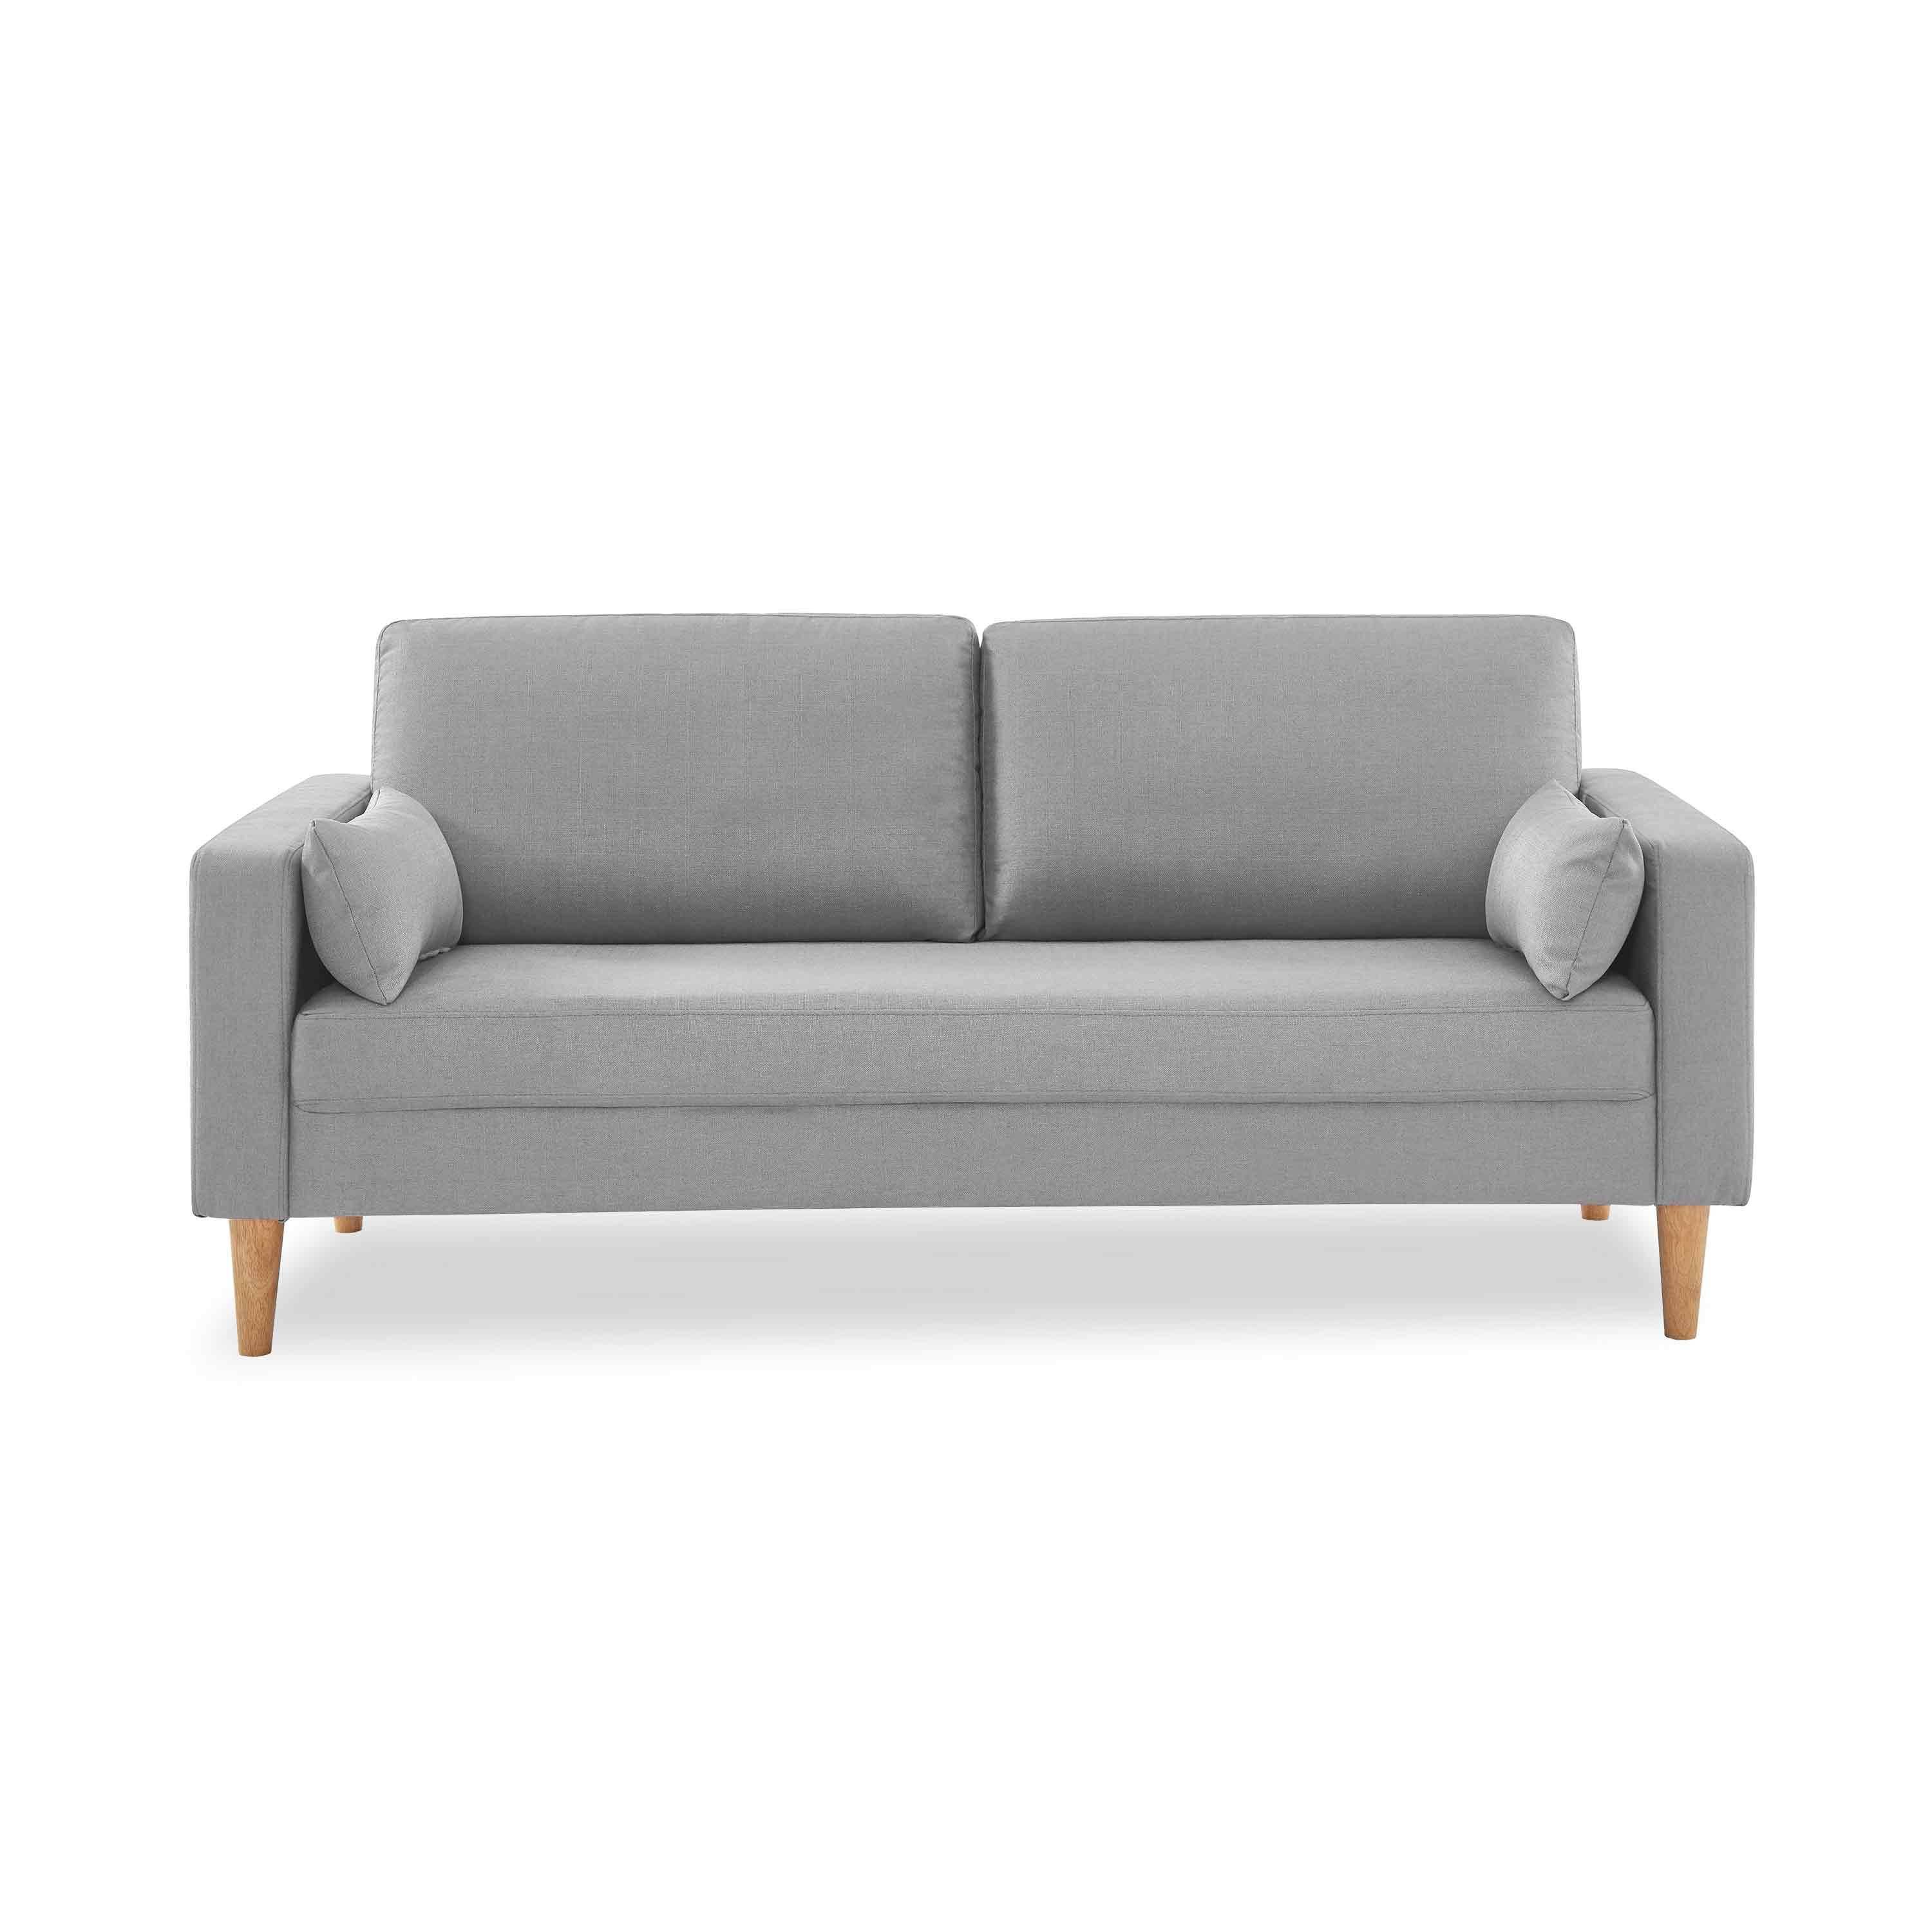 Large 3-seater sofa Scandi-style with wooden legs - Bjorn - Light Grey,sweeek,Photo3